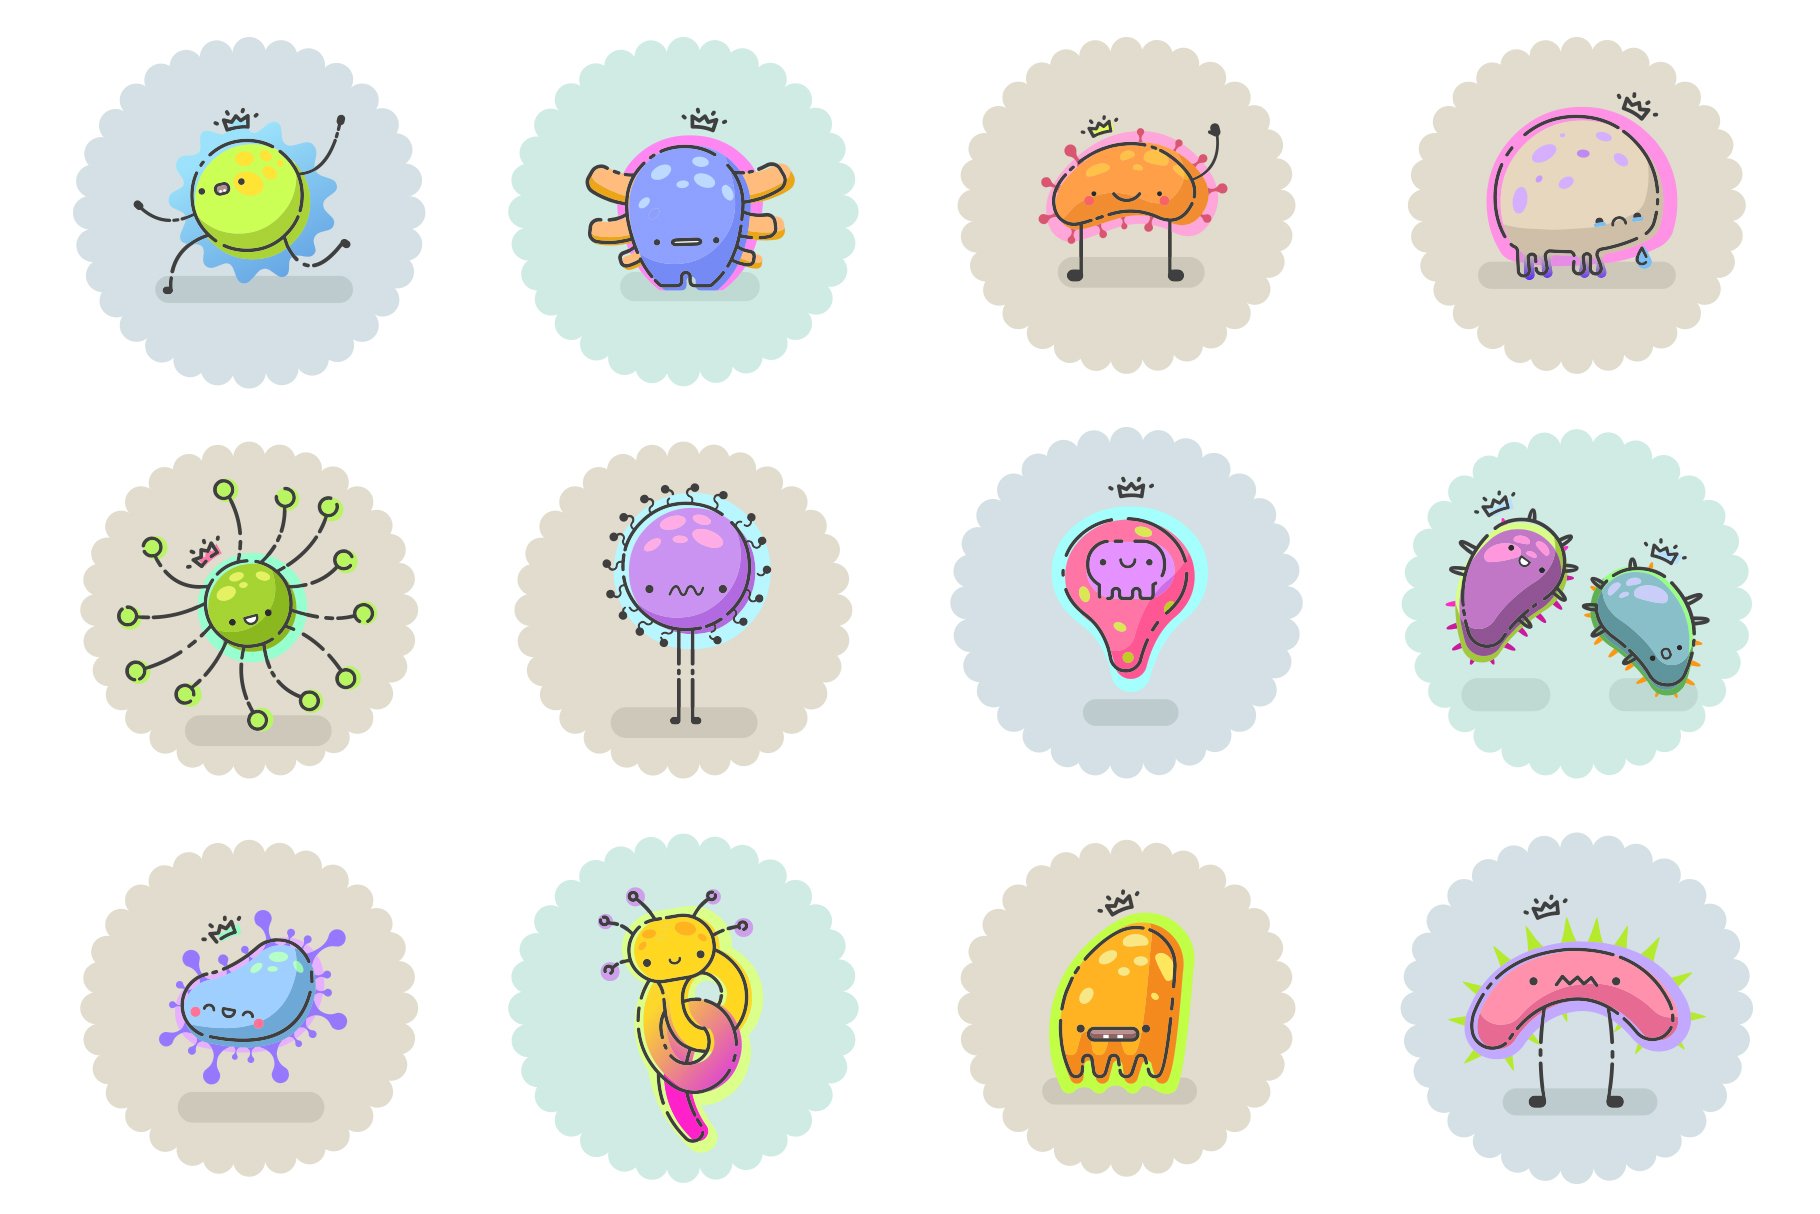 Virus bacteria cartoon characters cover image.